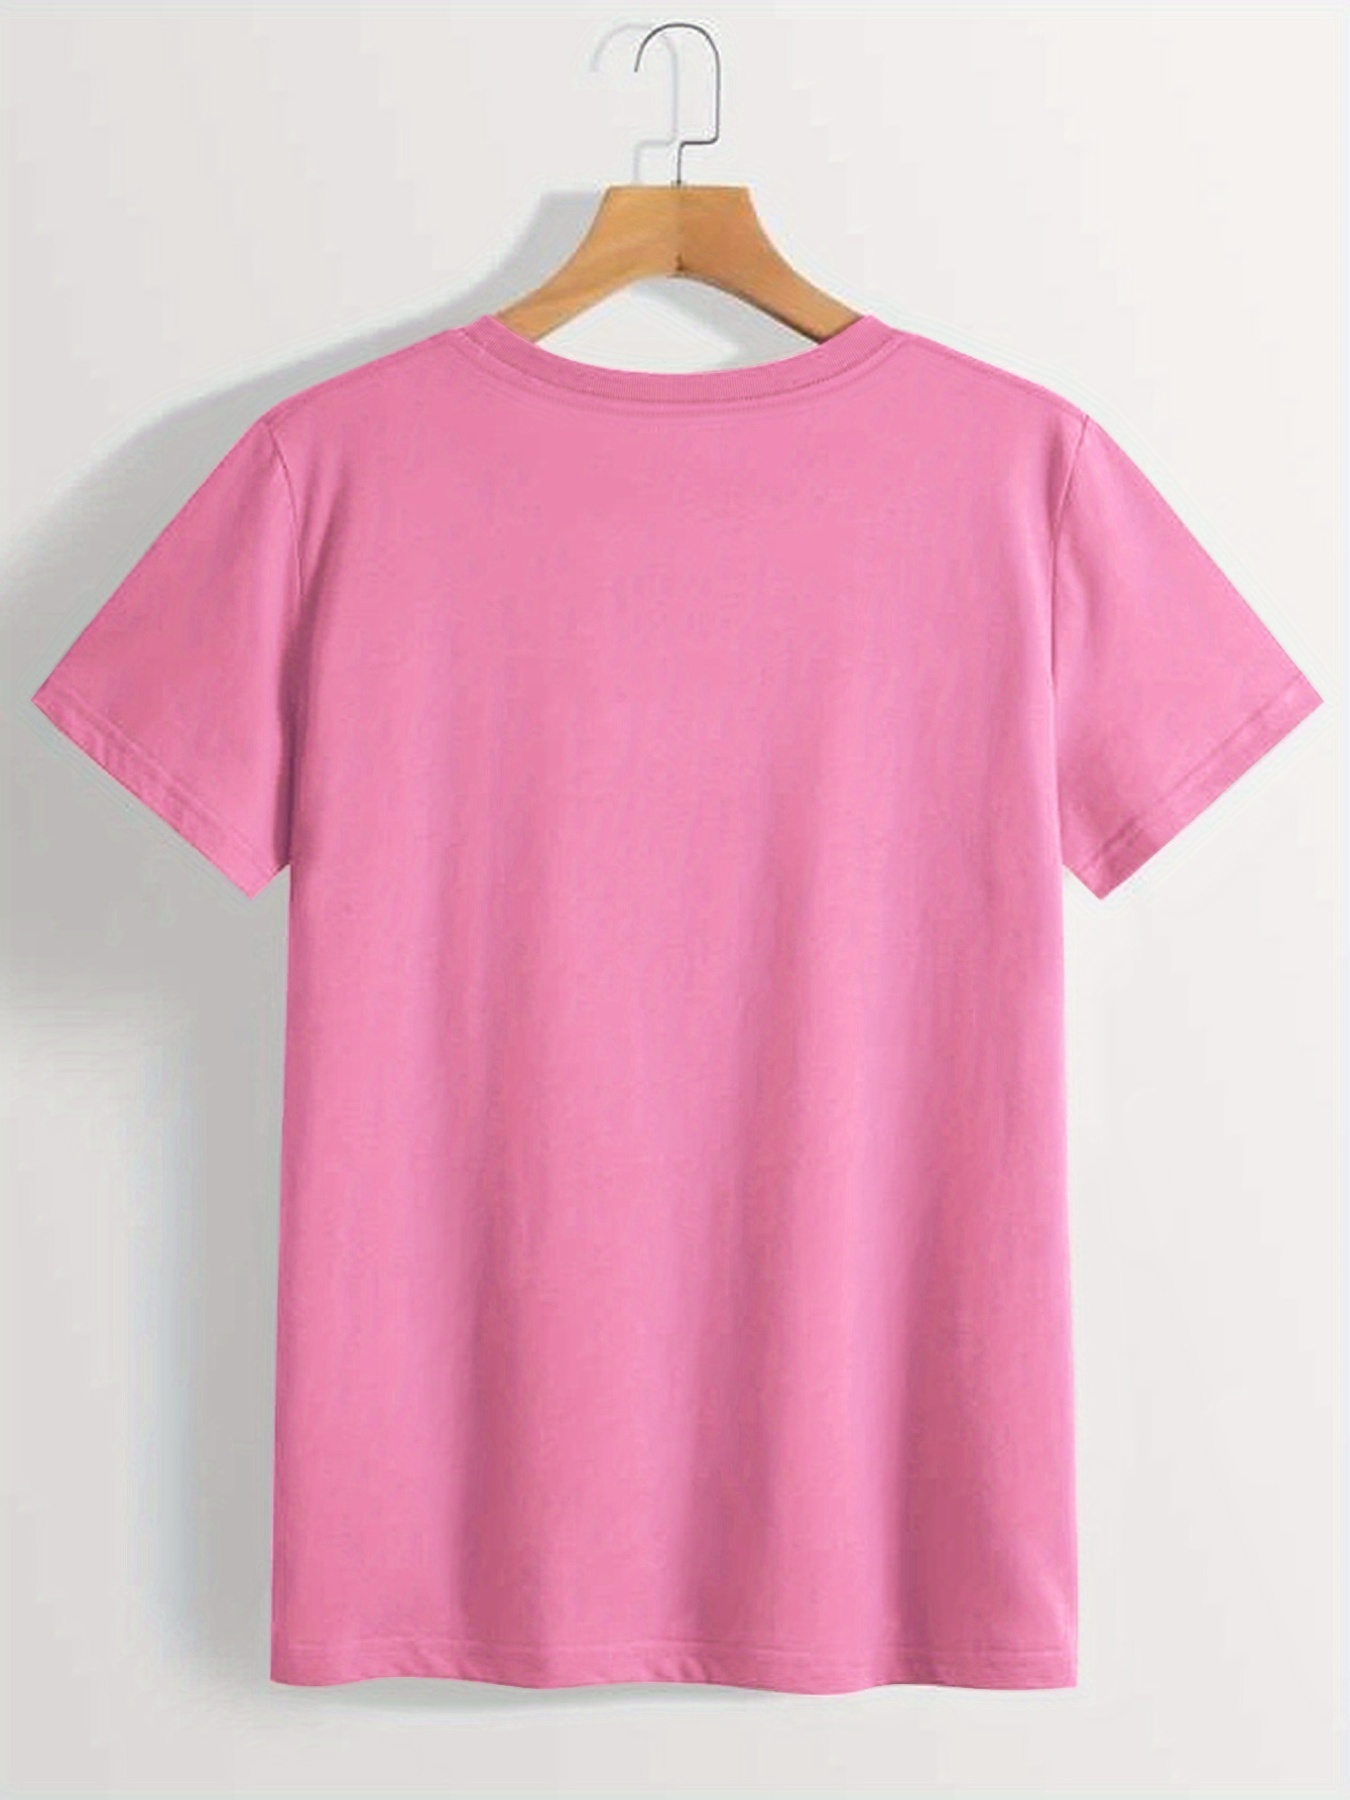 Women's T-shirt 100 % Cotton Summer Fashion Casual Oversized T-shirts  Crewneck Pink White Women Tops Elegant Clothing Female